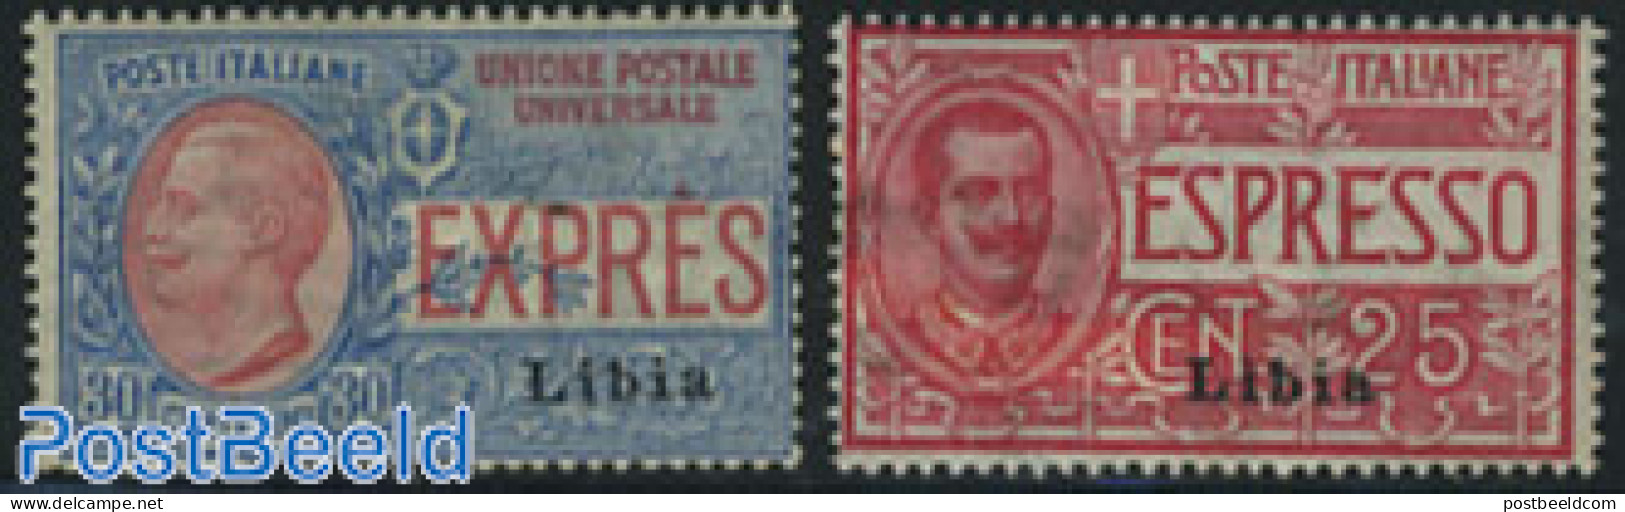 Italian Lybia 1915 Express Mail 2v, Mint NH - Libye